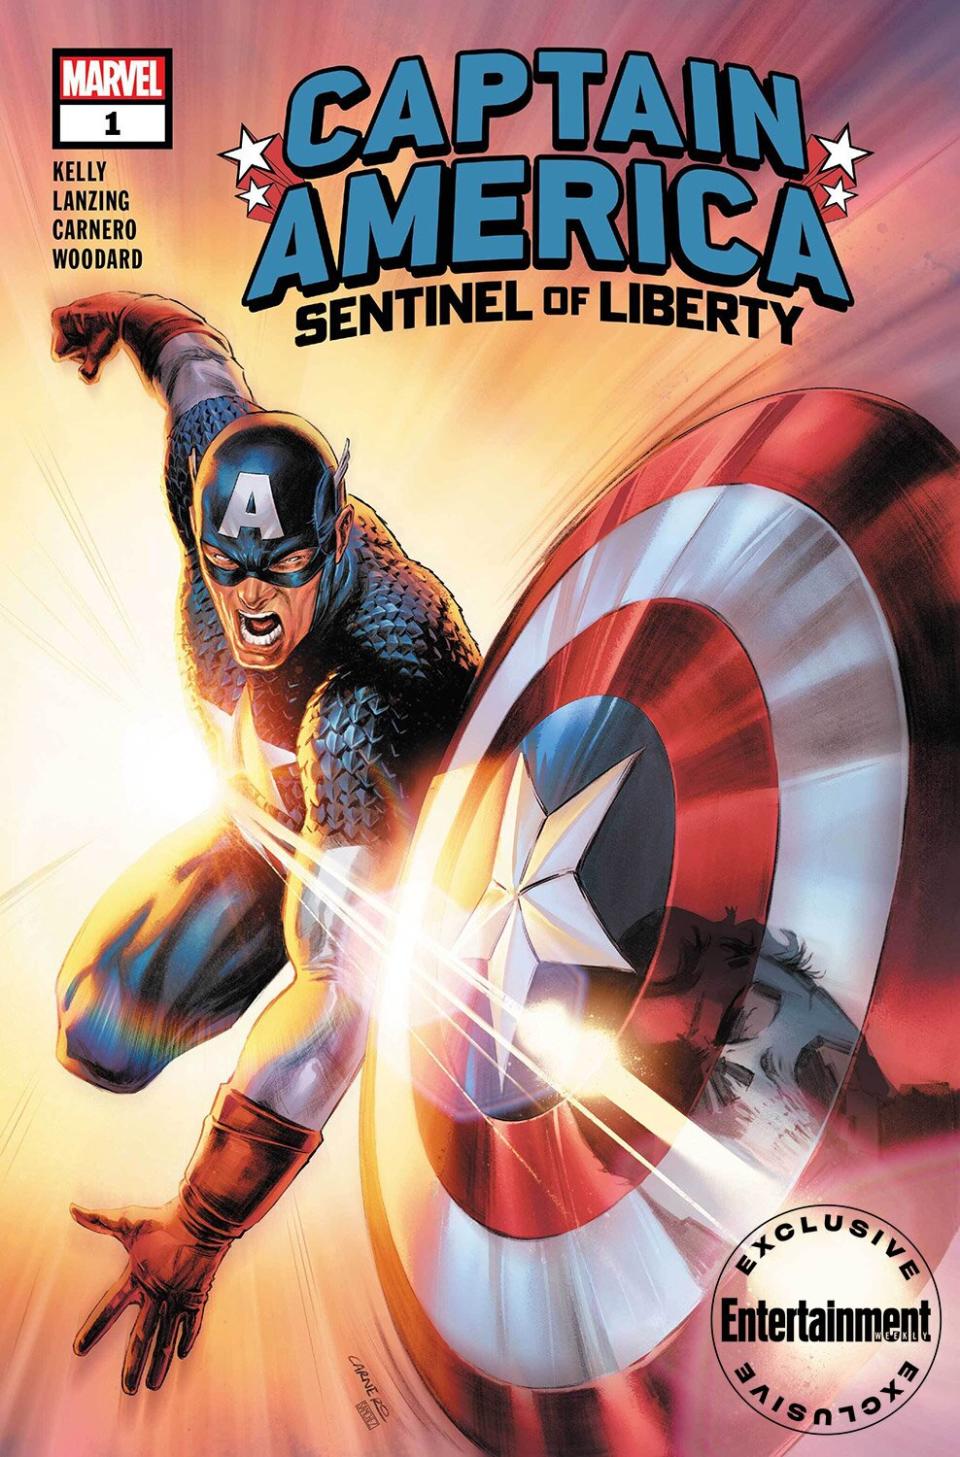 'Captain America' comics